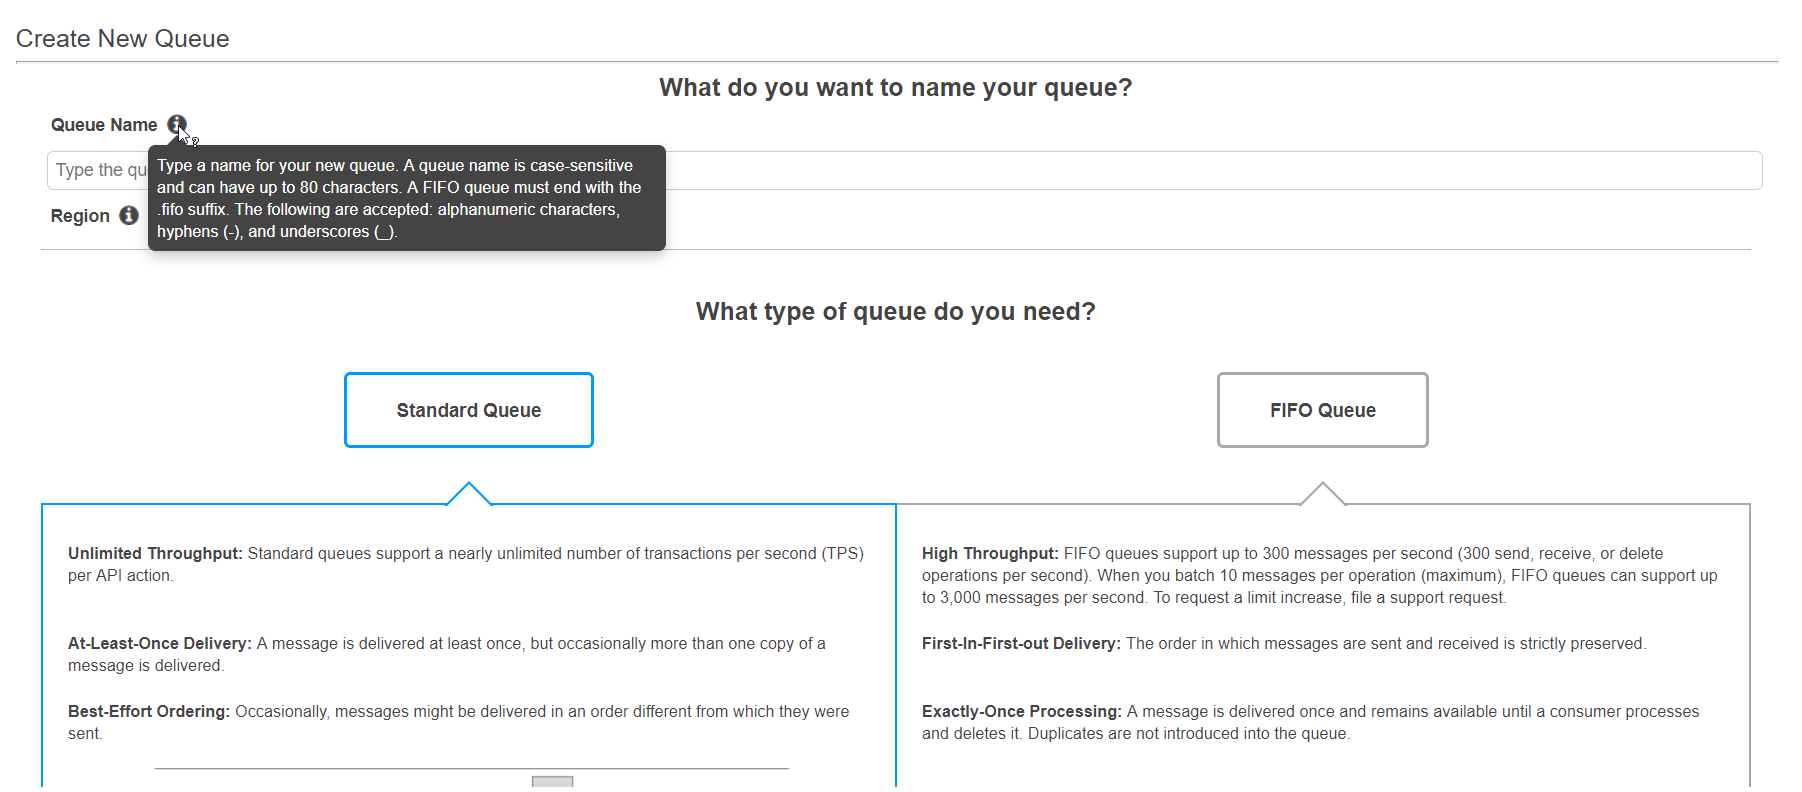 creating a new queue in Amazon SQS, Mailtrap's tutorial